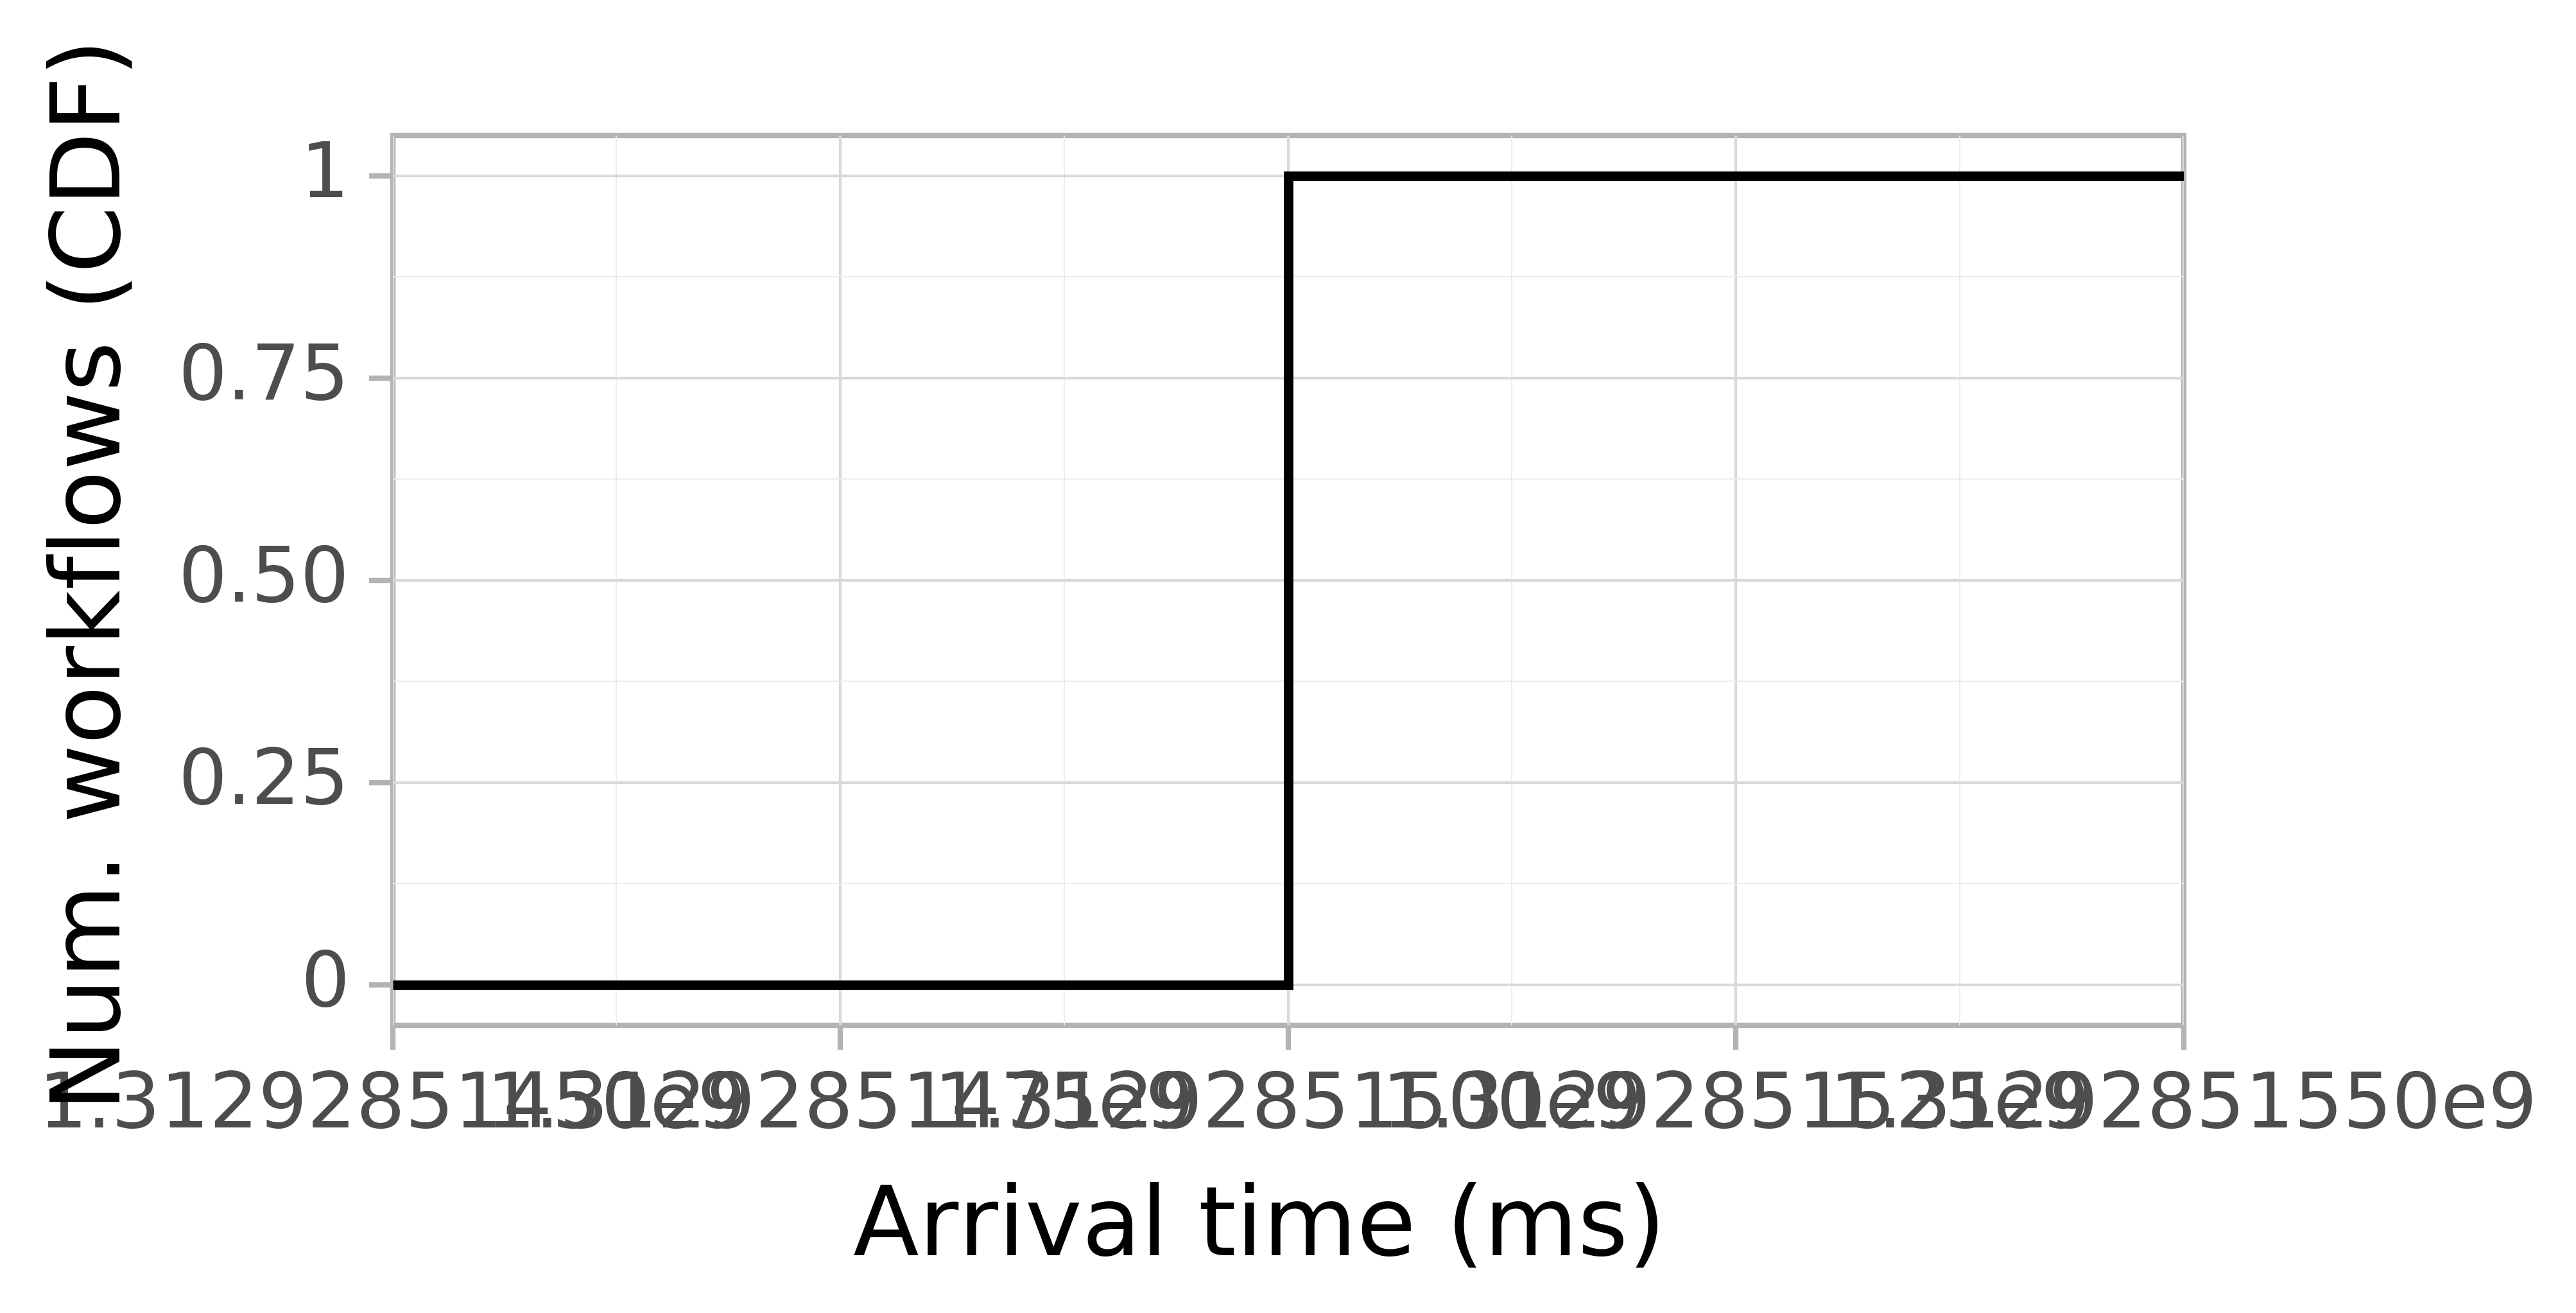 Job arrival CDF graph for the Pegasus_P4 trace.